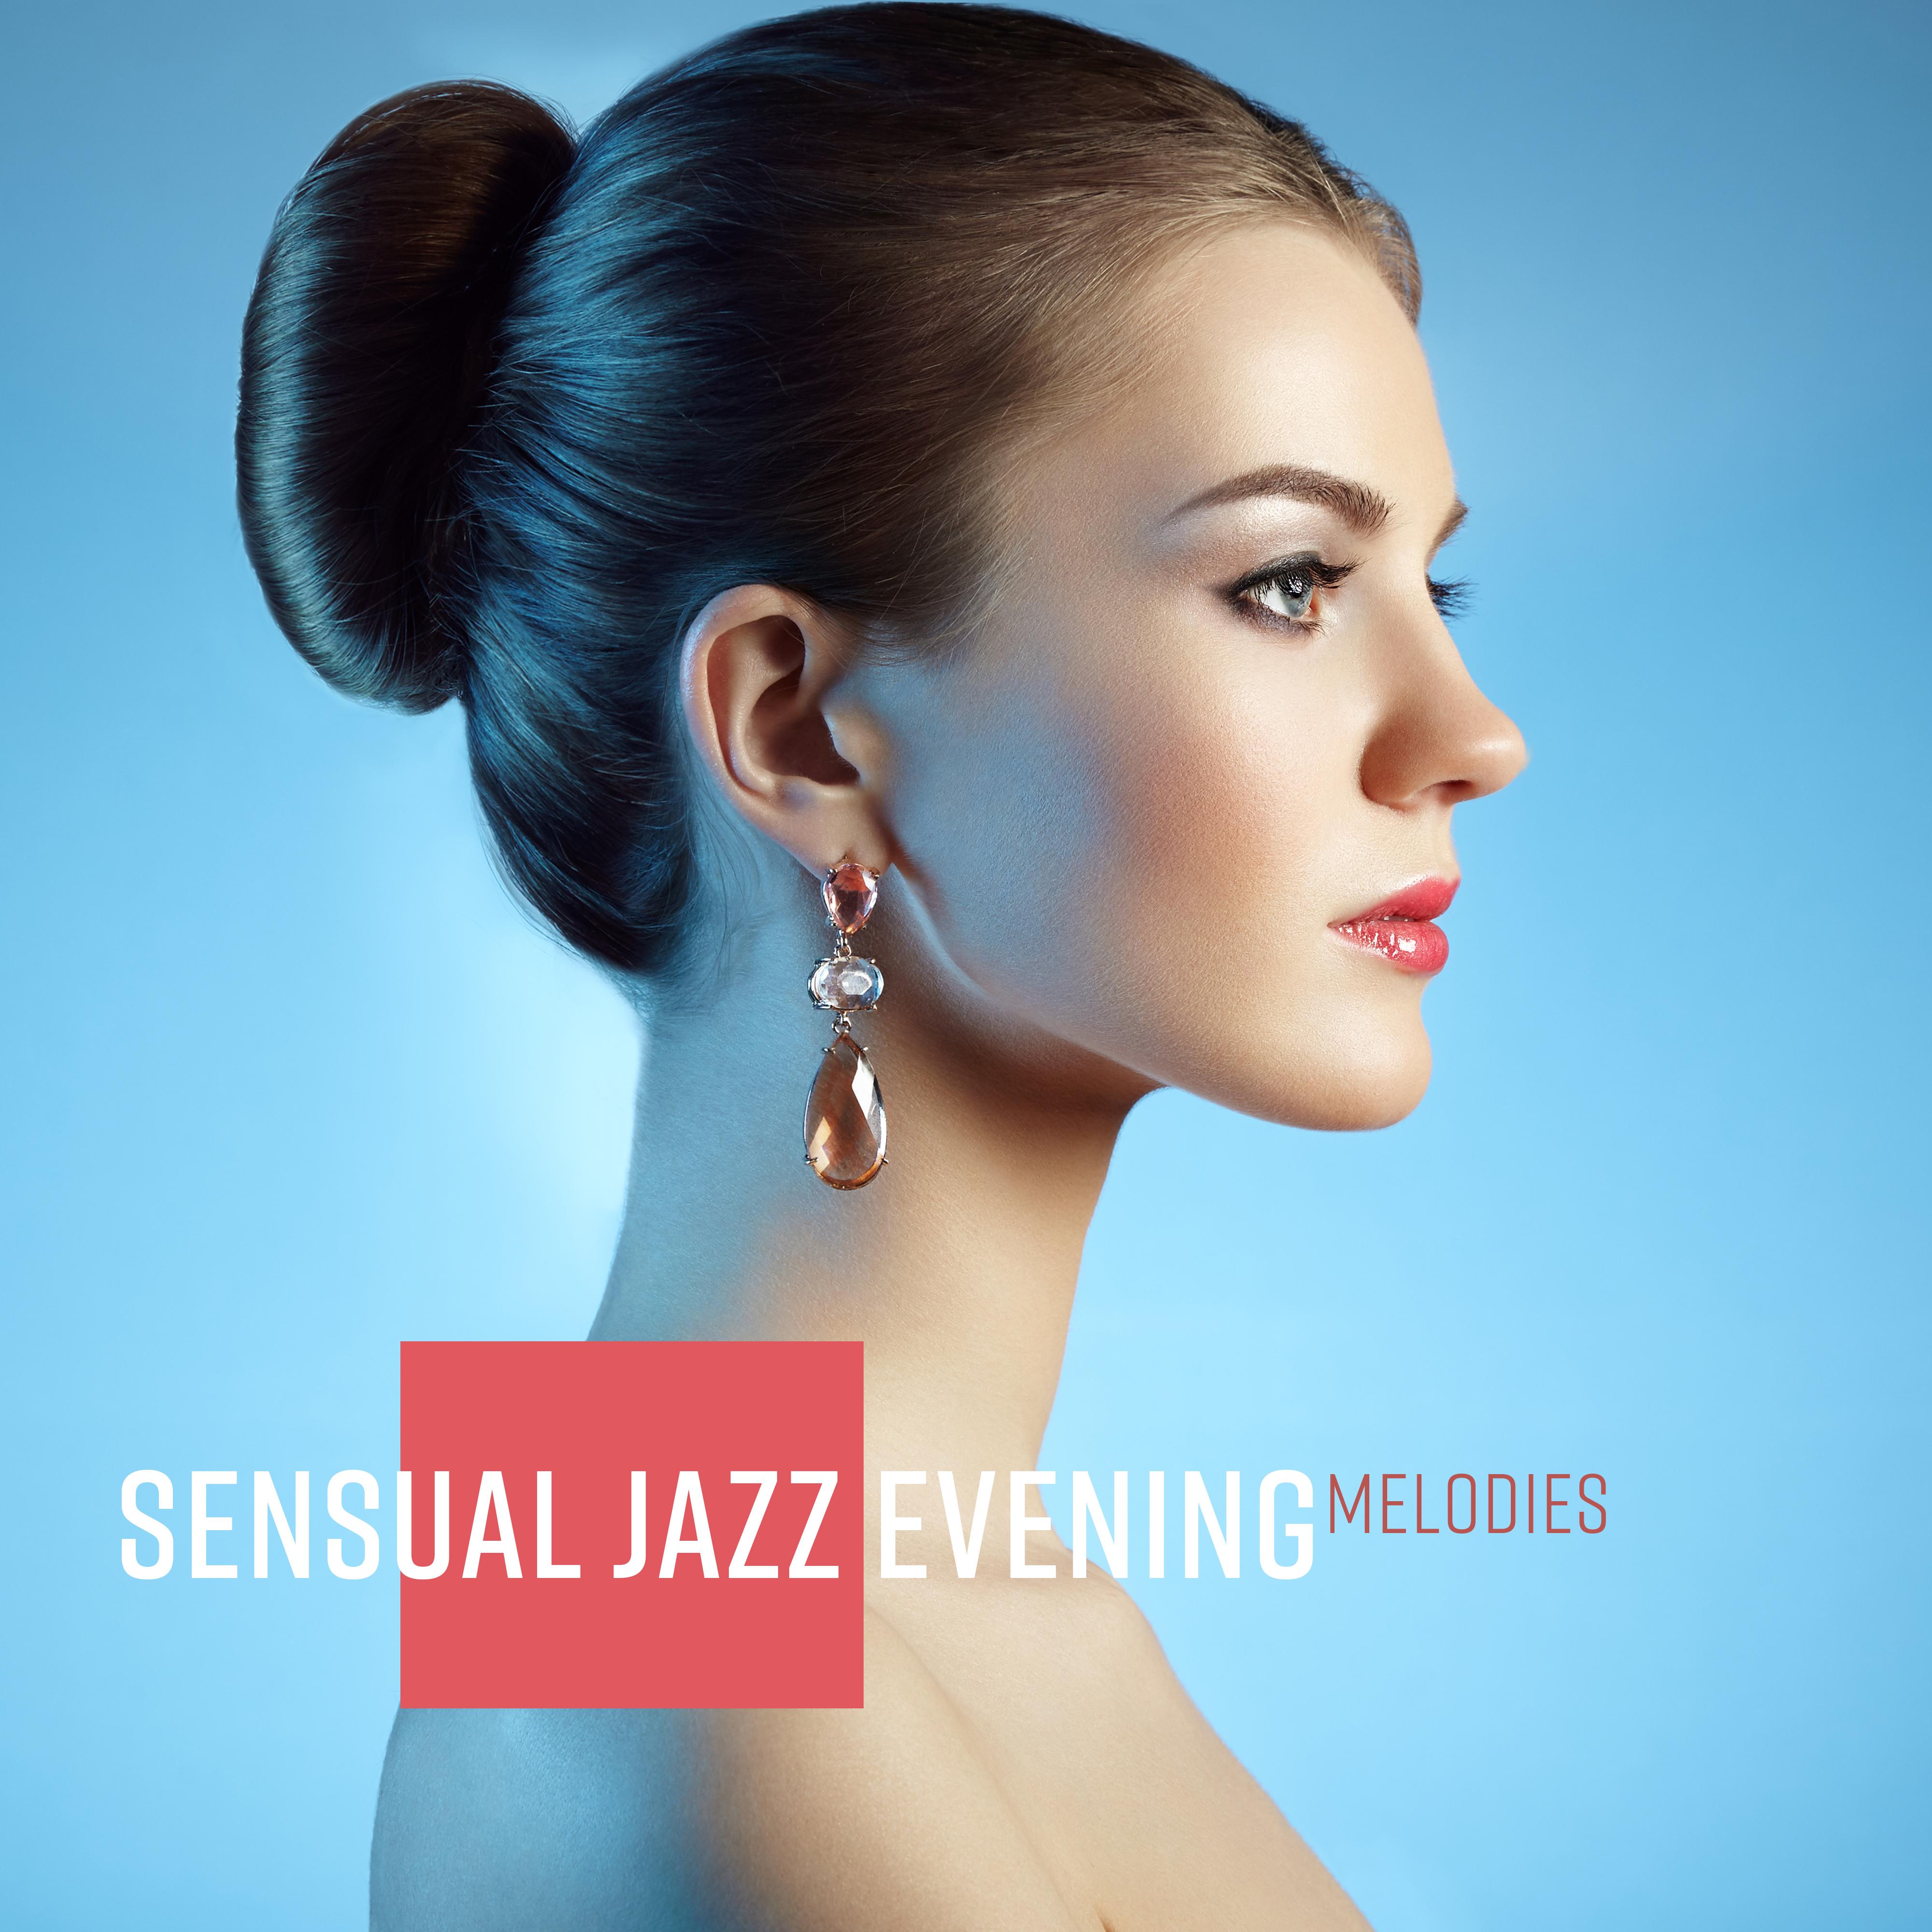 Sensual Jazz Evening Melodies